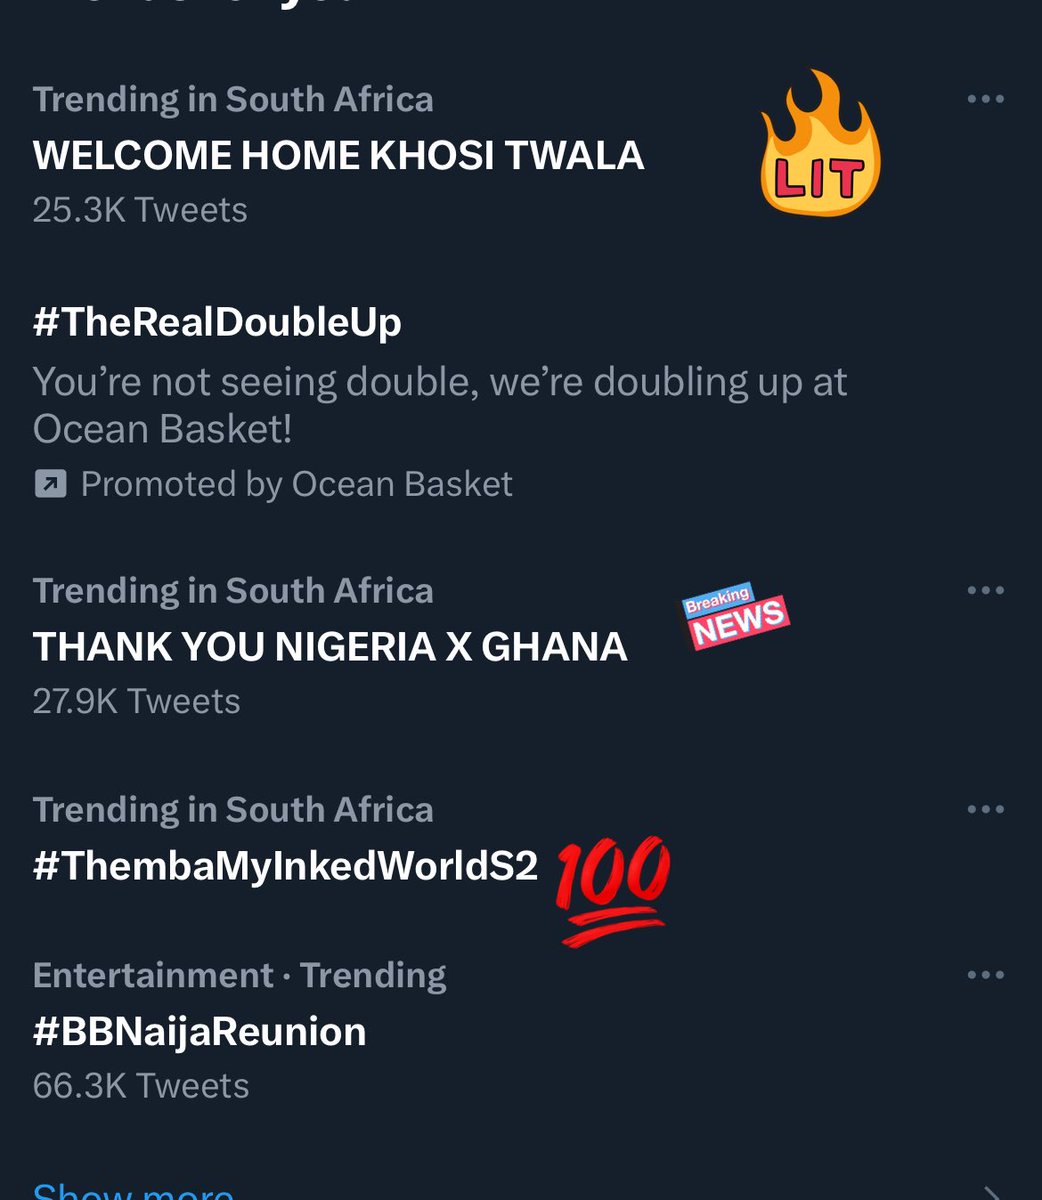 #ThembaMyInkedWorldS2

THANK YOU NIGERIA X GHANA
WELCOME HOME KHOSI TWALA
#KhosiTwala